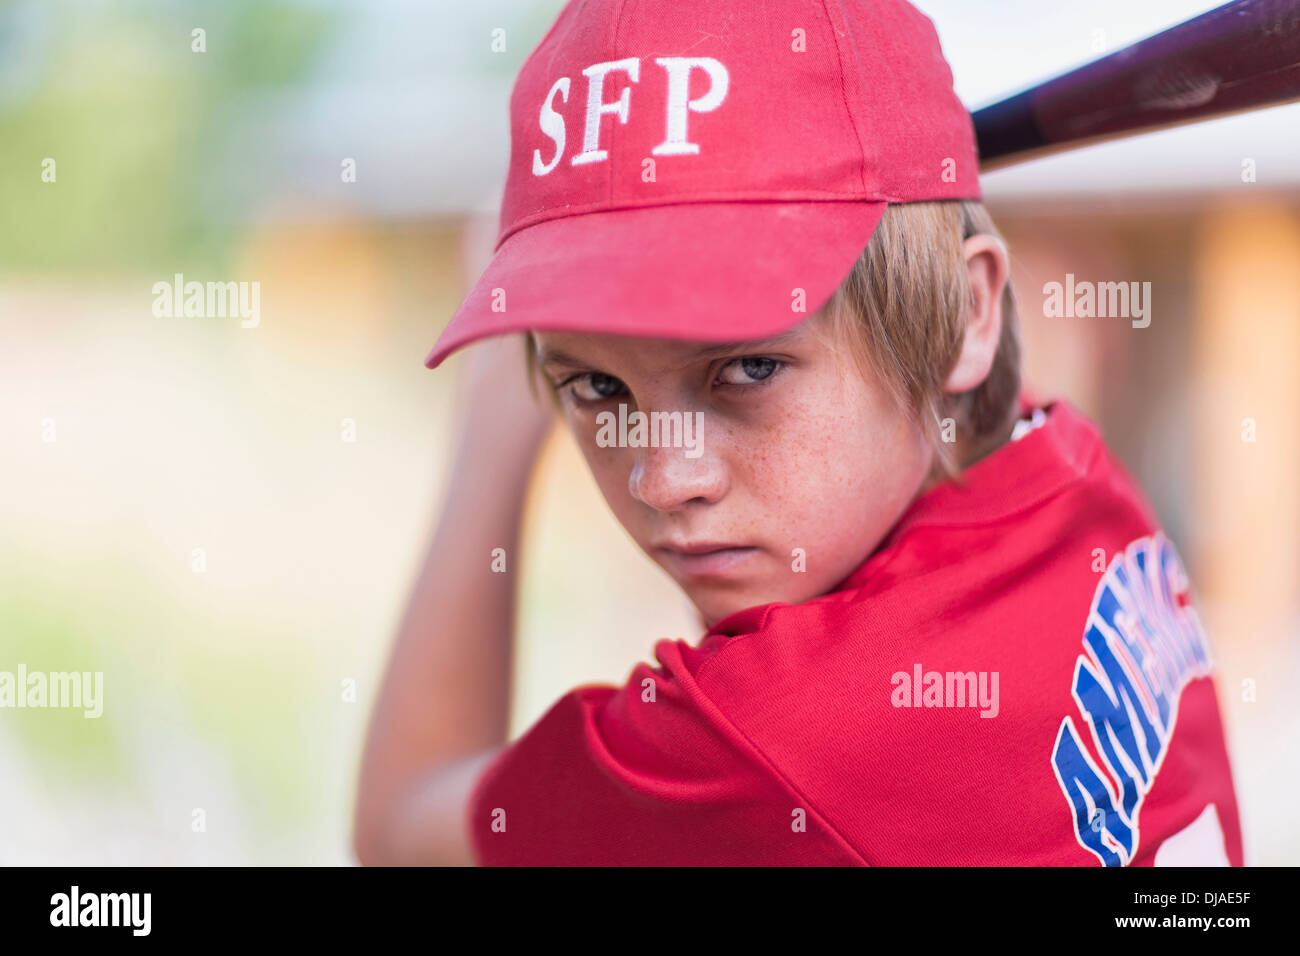 Caucasian boy playing baseball outdoors Stock Photo